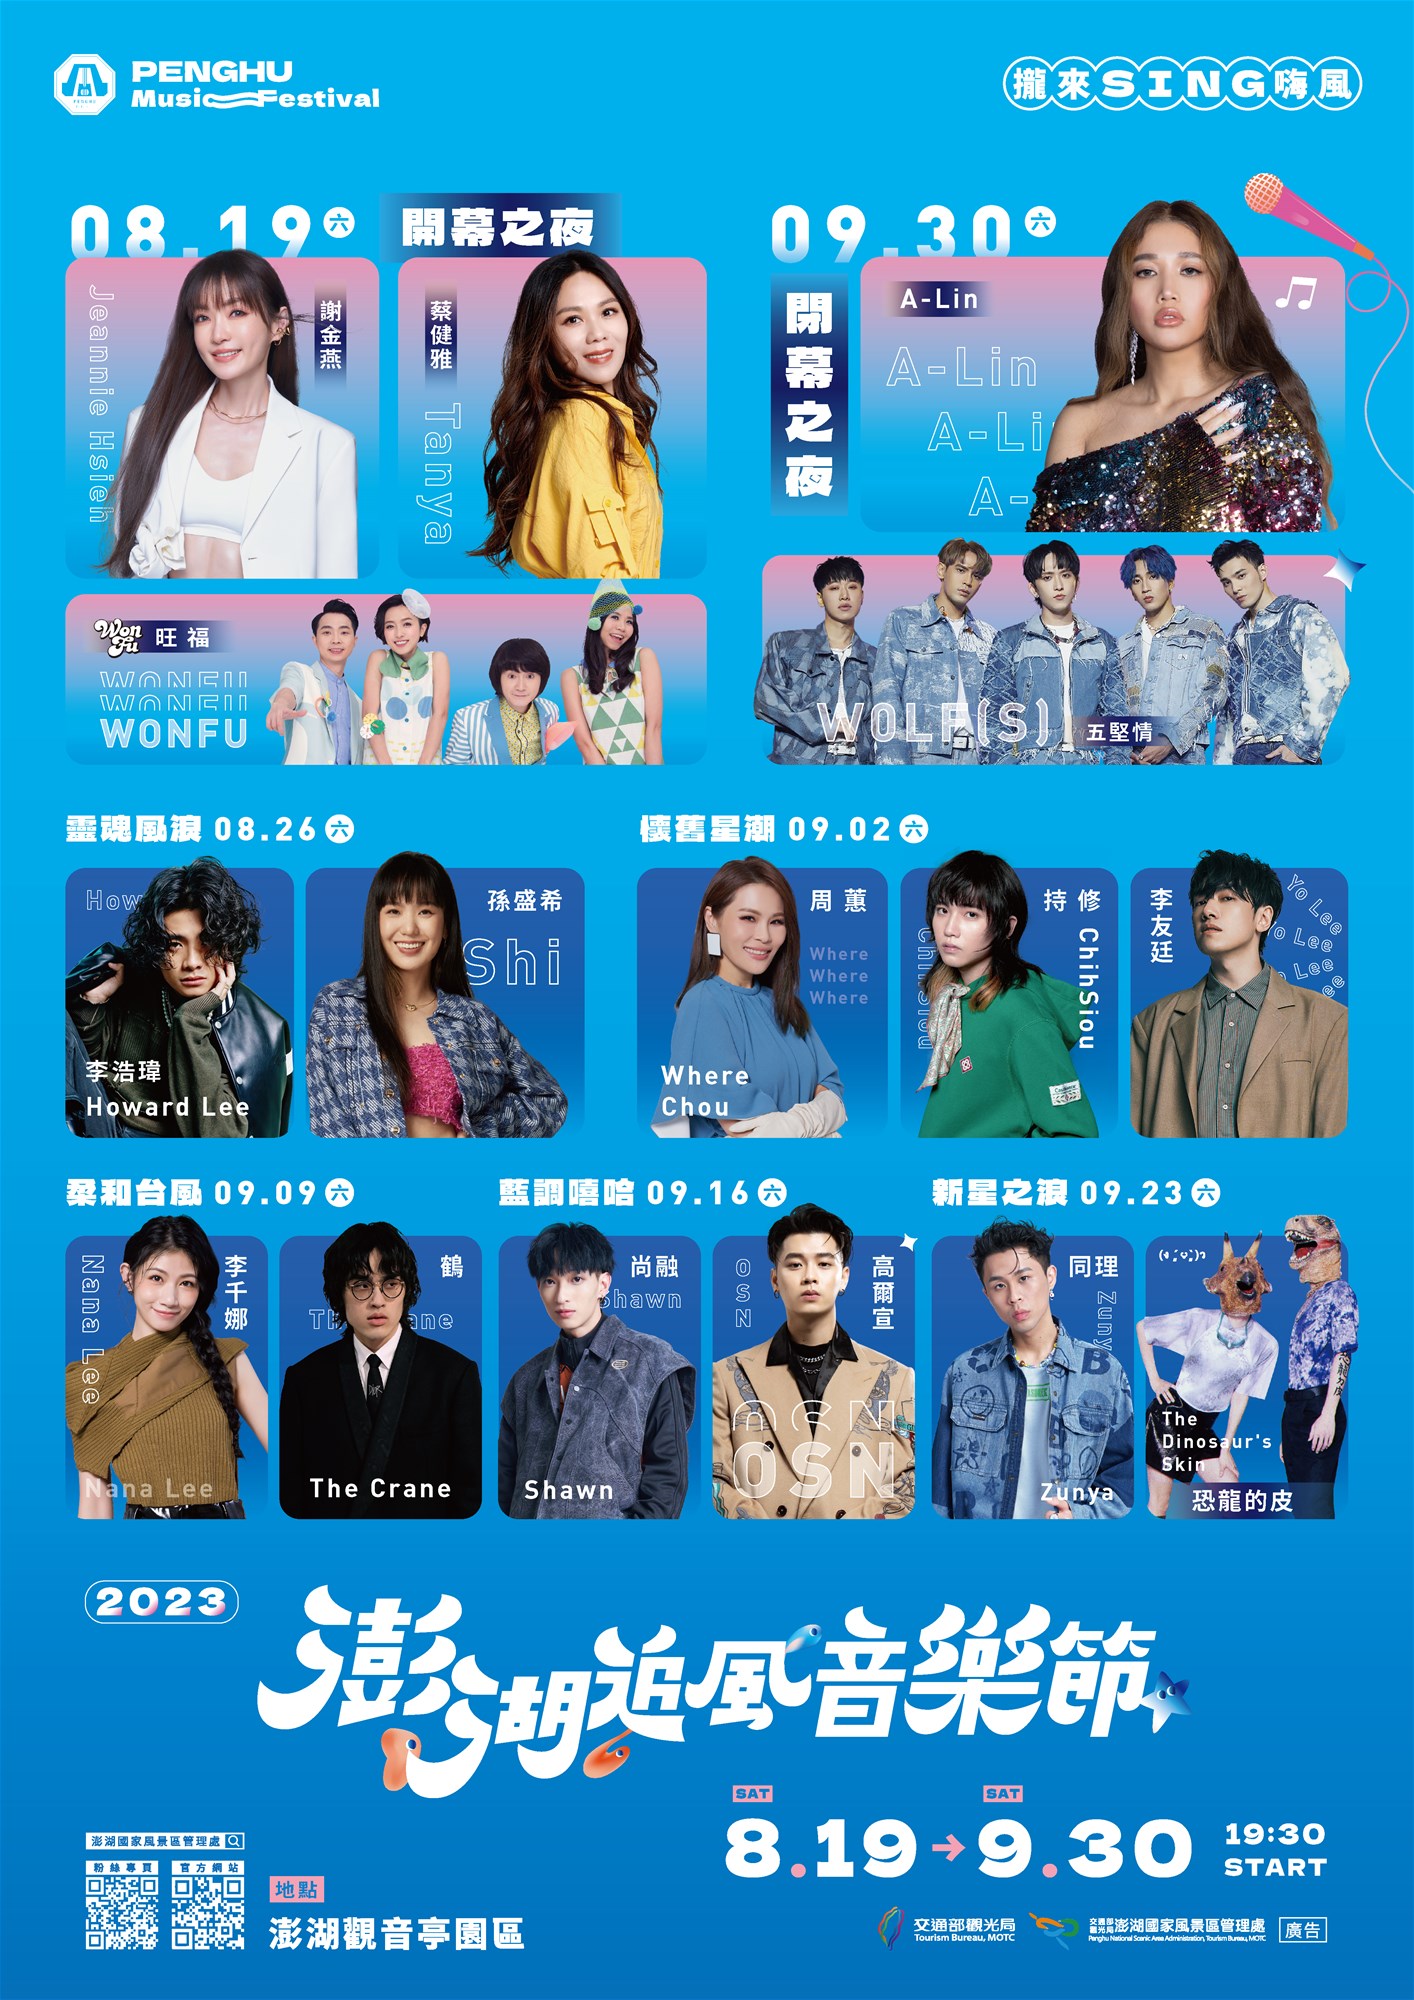 2023 Penghu Chasing Wind Music Festival